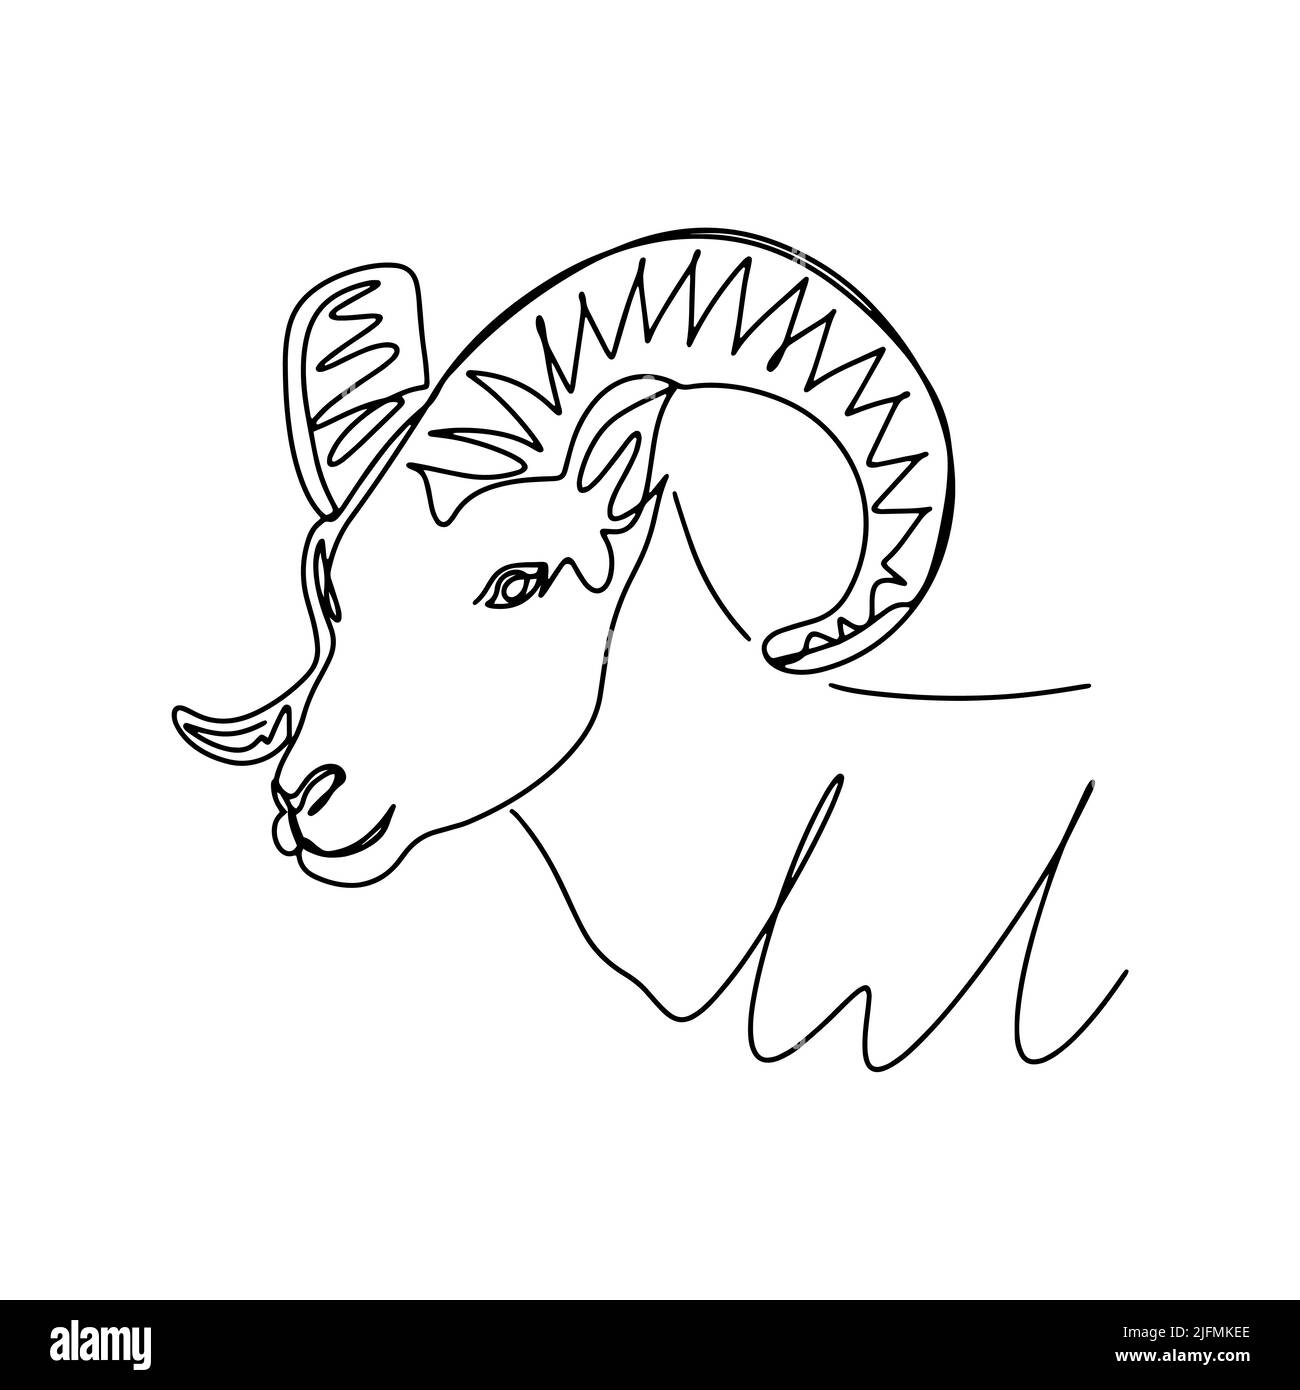 Ram line art isolated vector illustration. Silhouette head of horned animal. Sheep black line icon on white background Stock Vector